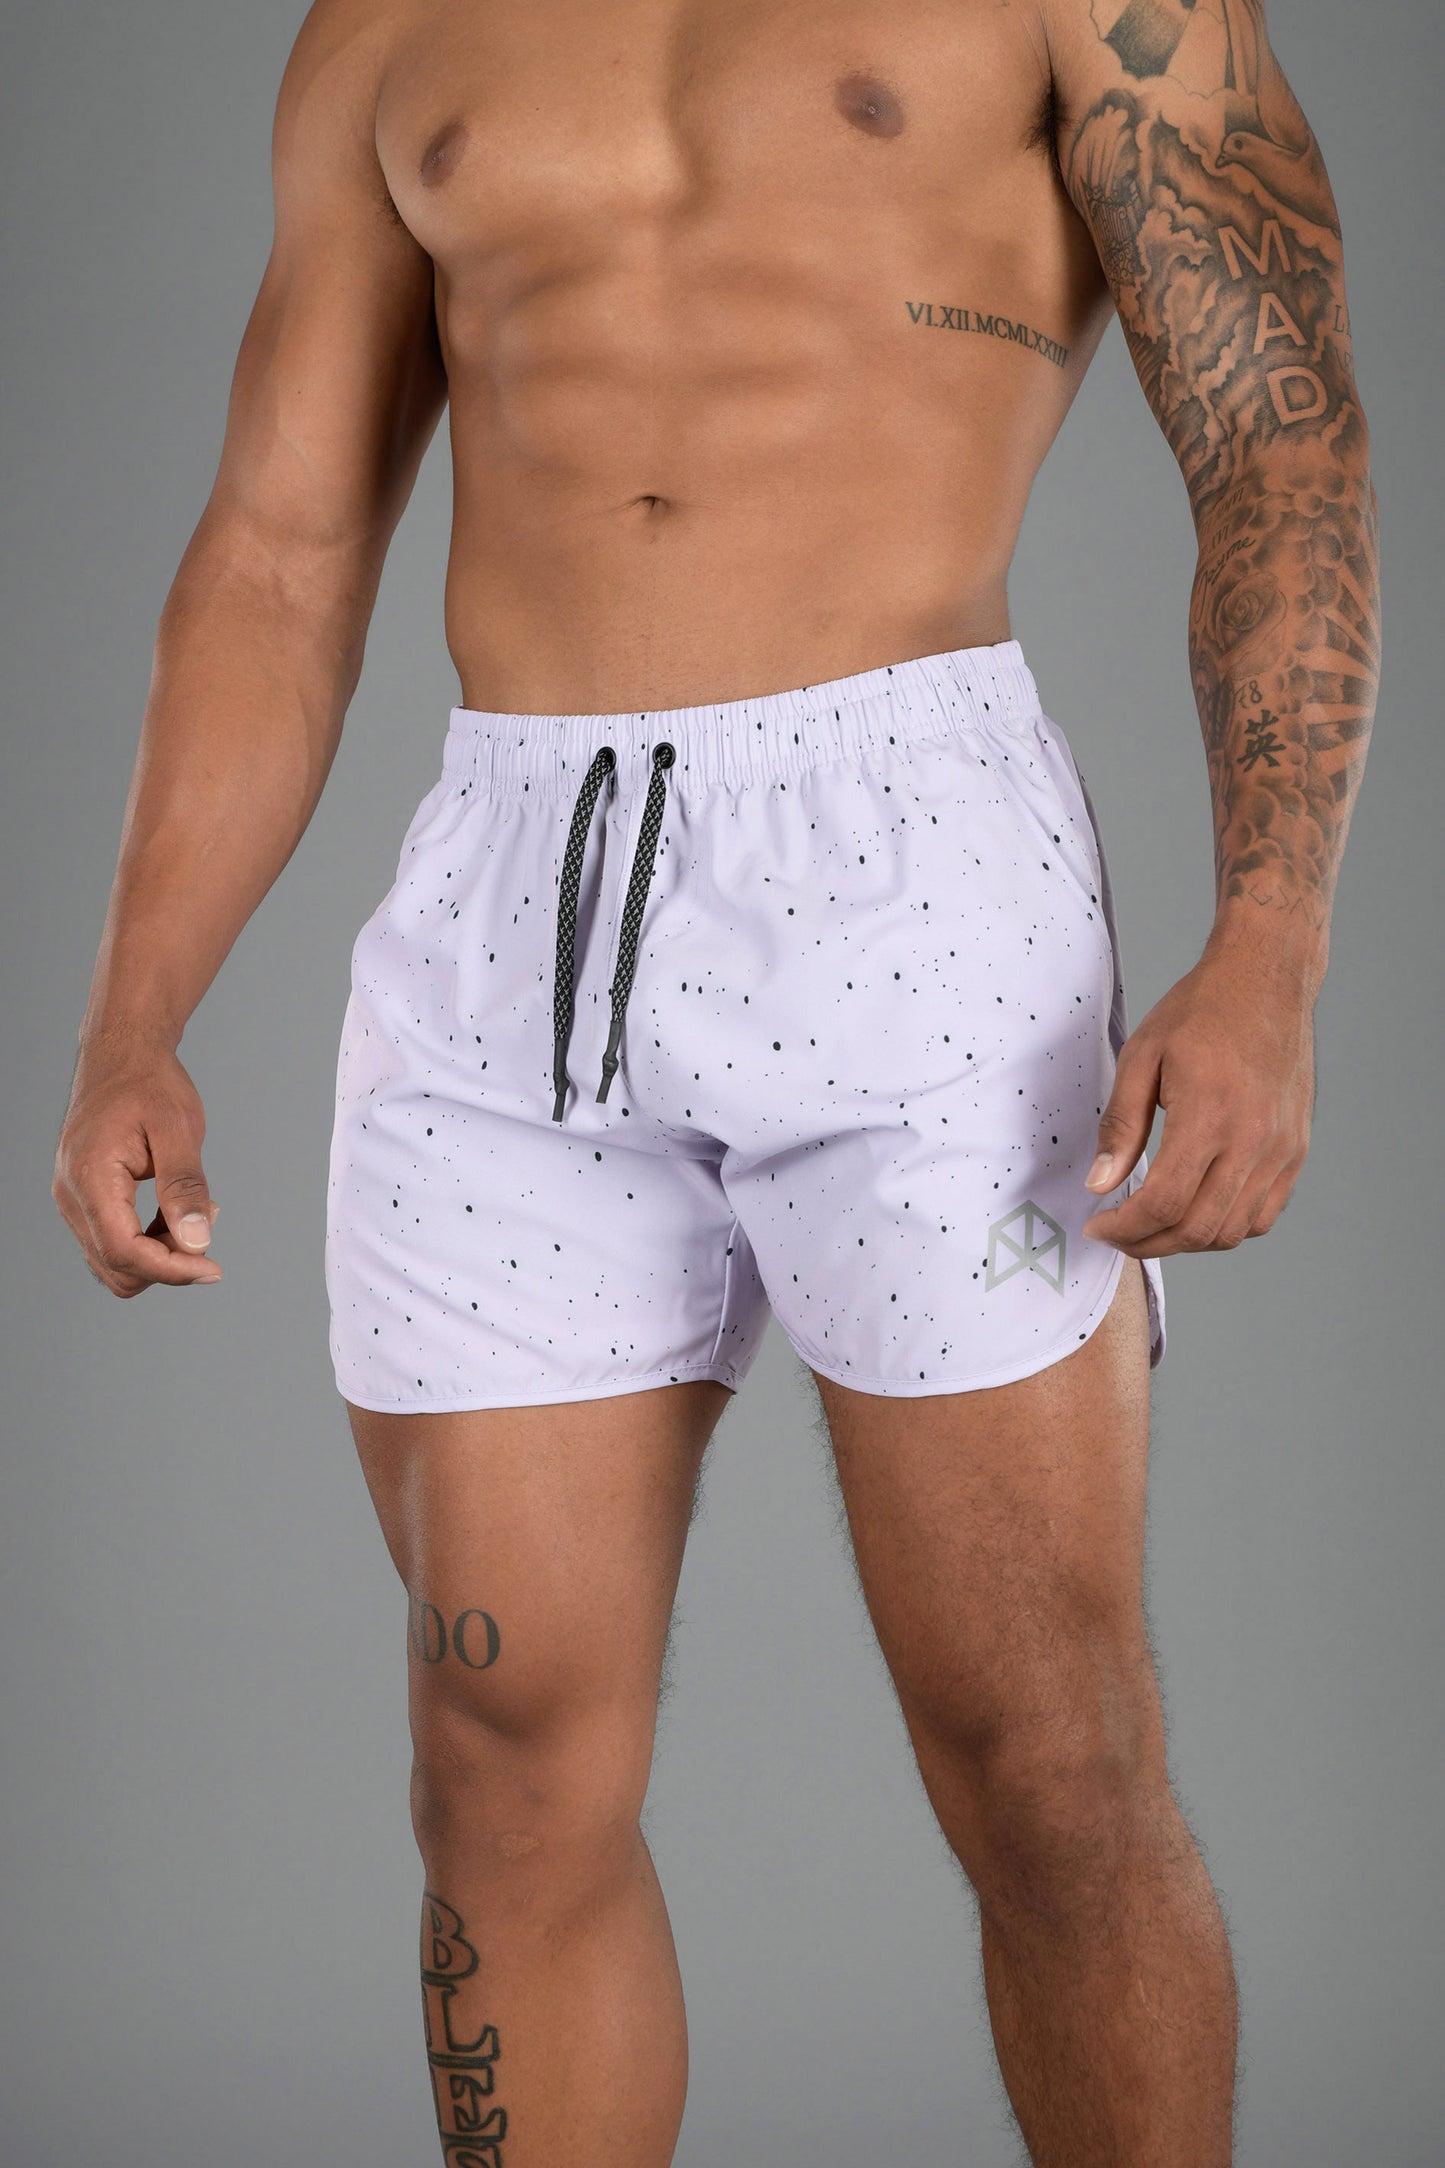 Rawgear dotted print shorts - RG116